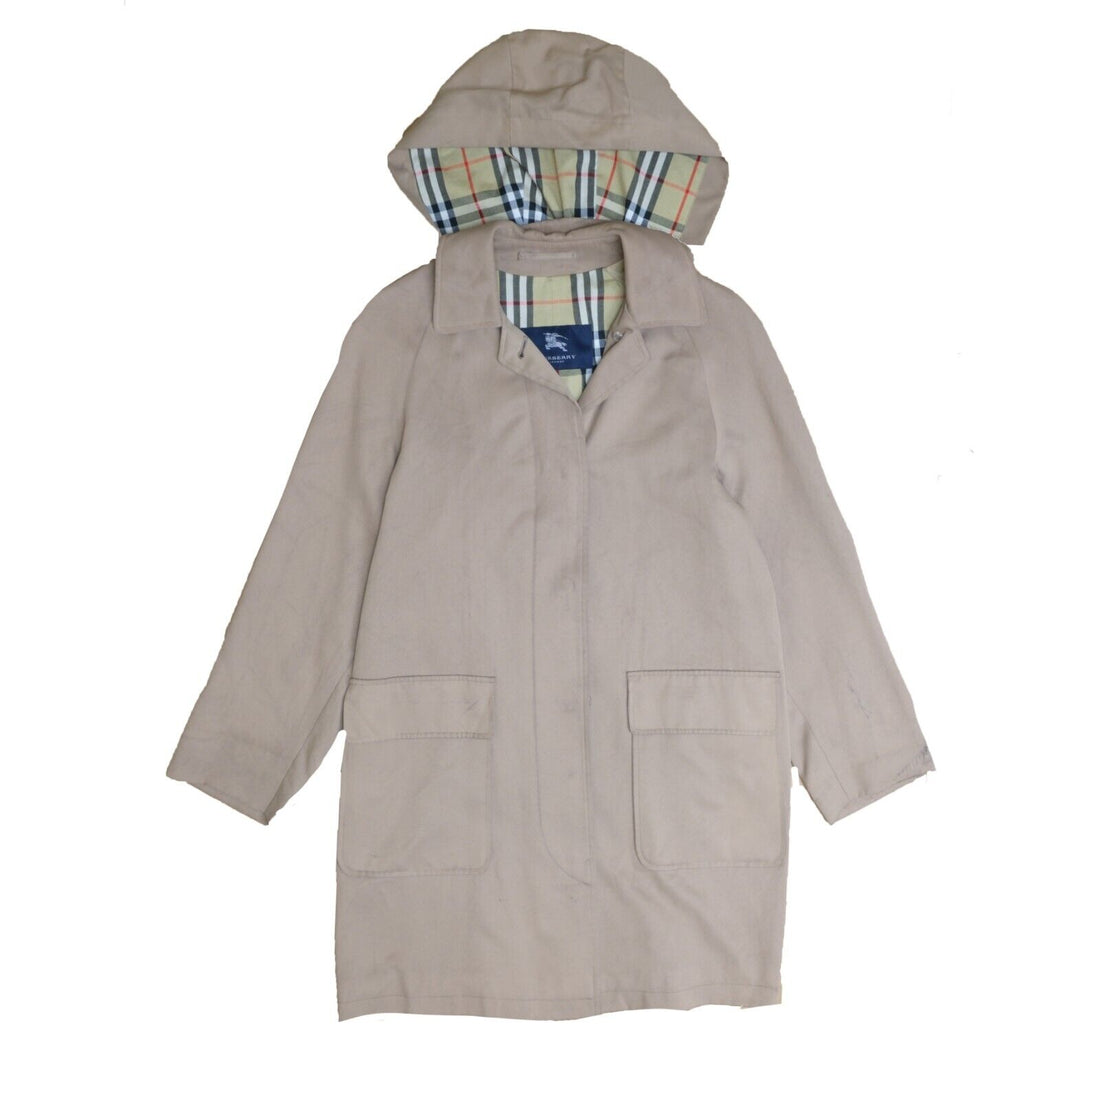 Burberry London Trench Coat Jacket Womens Size Small Hooded Nova Check Plaid